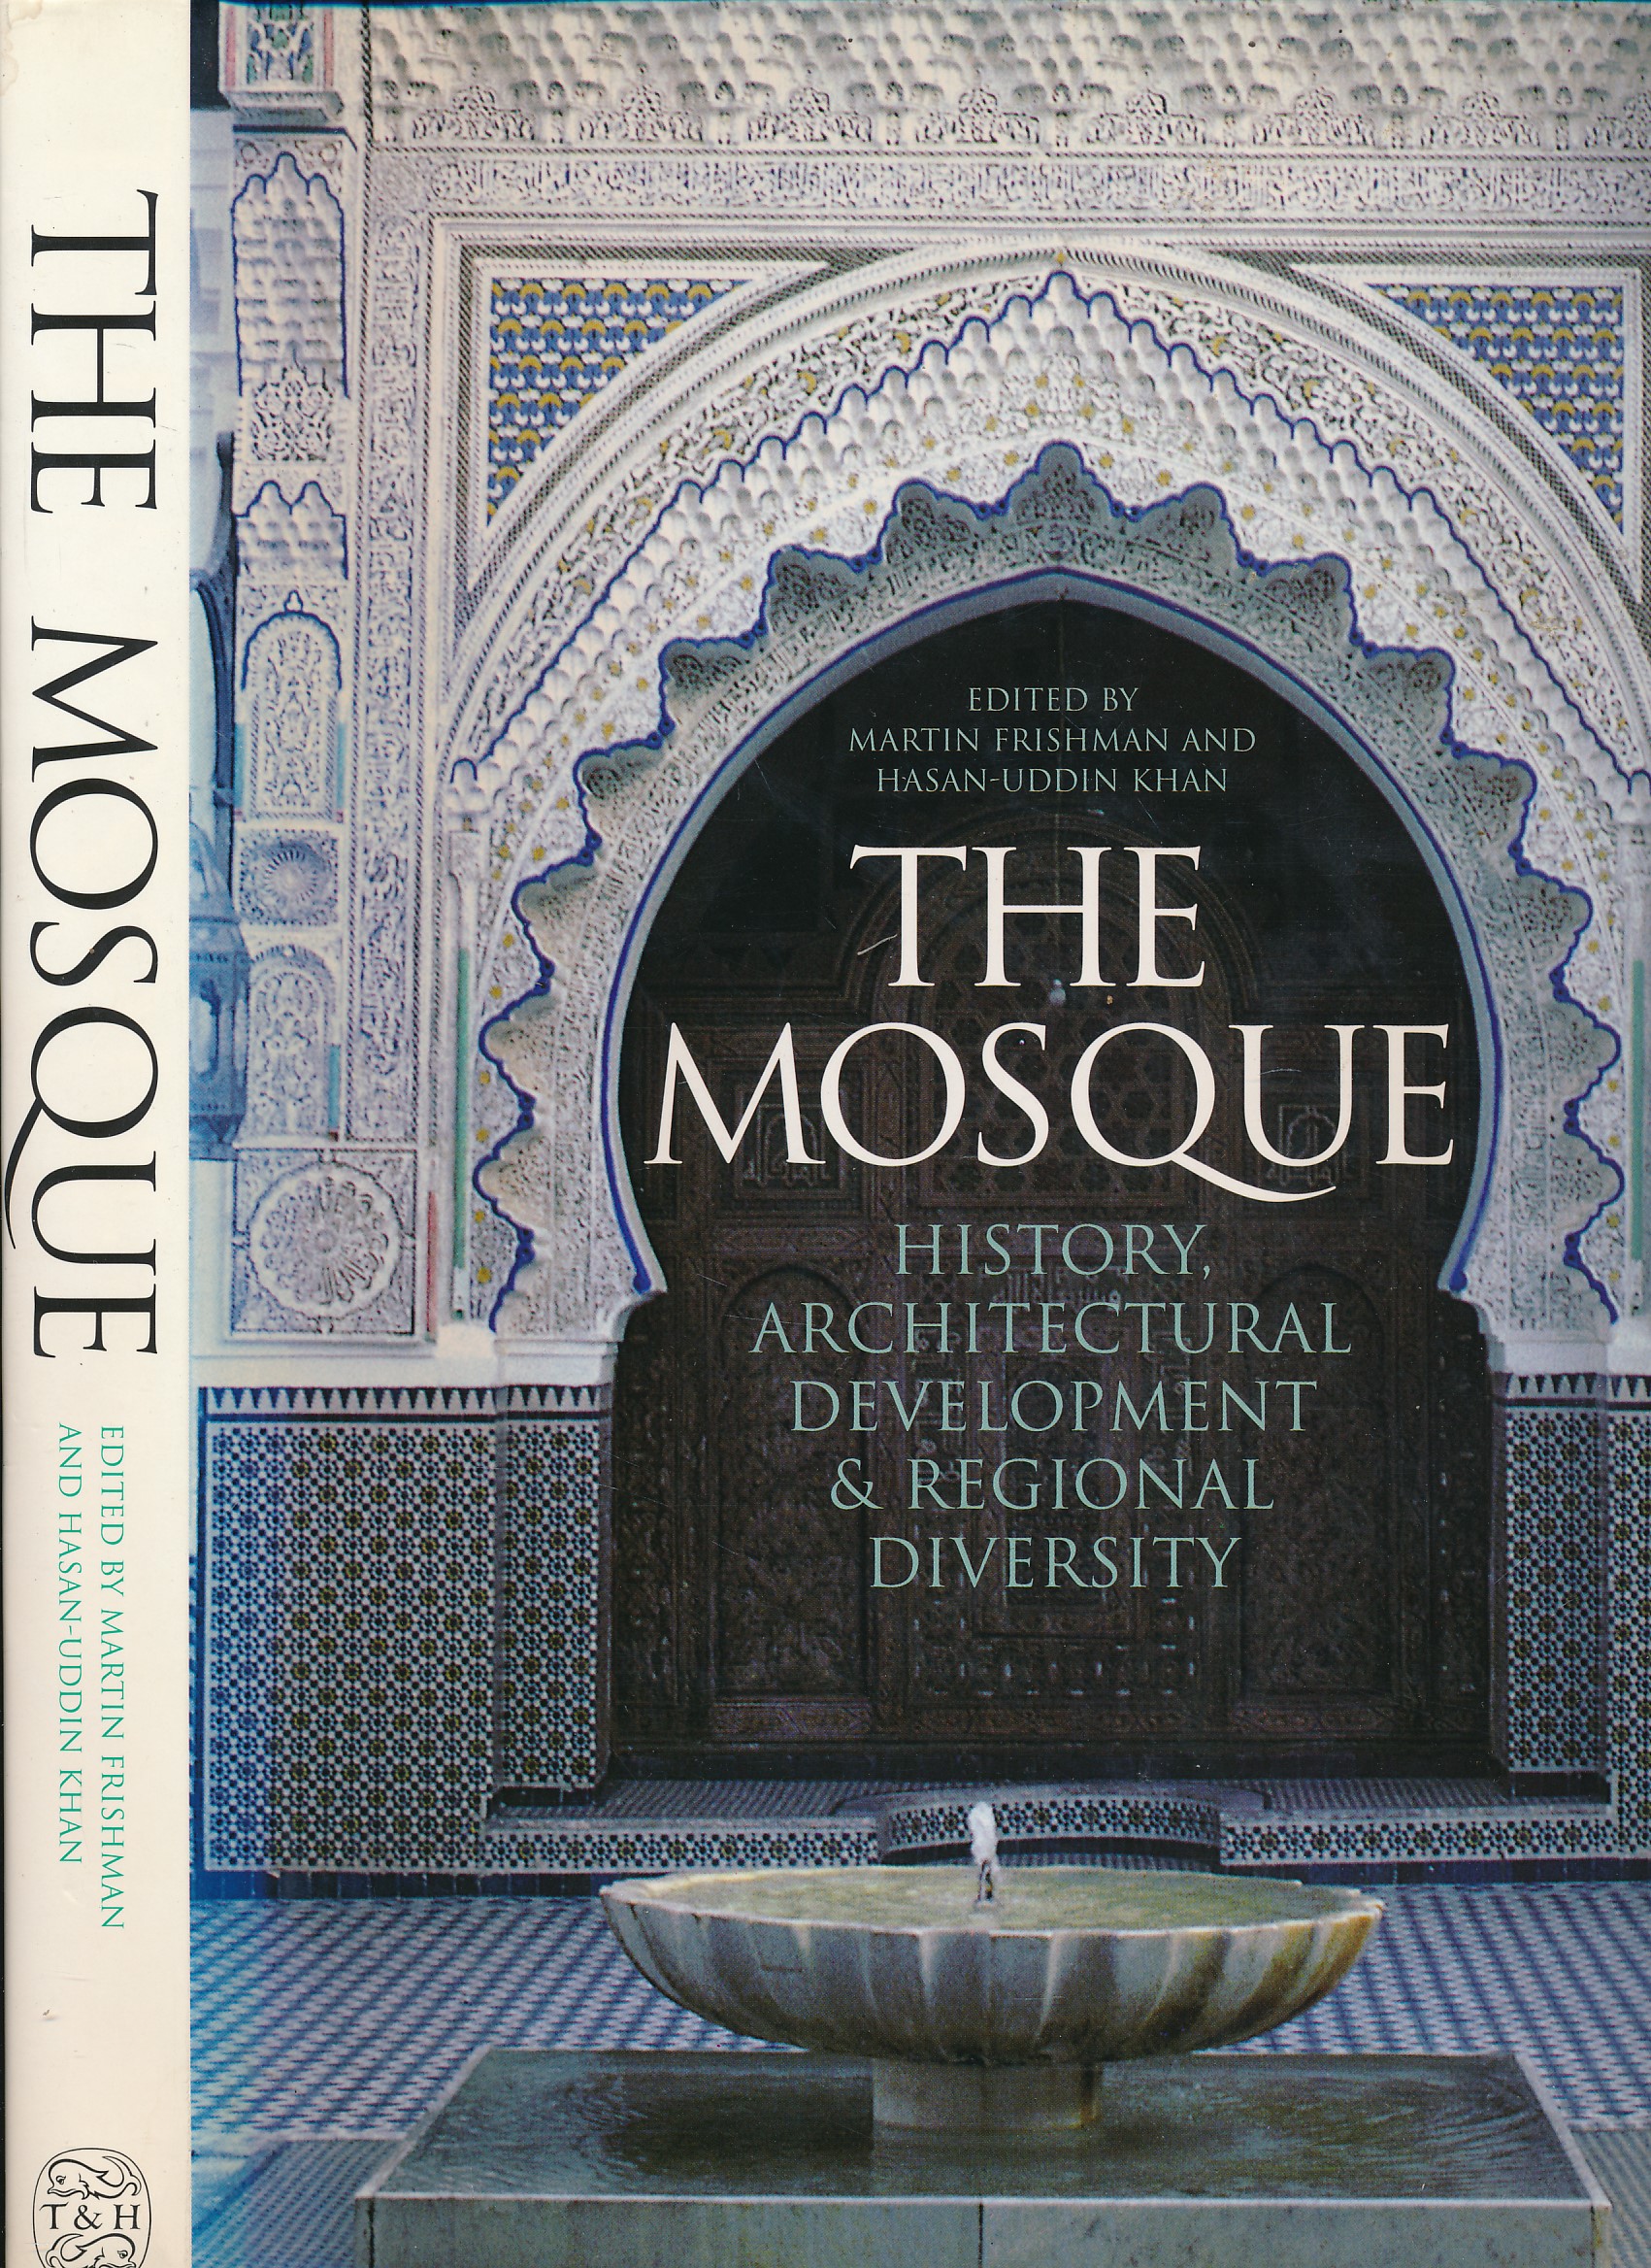 The Mosque. History, Architectural Development & Regional Diversity